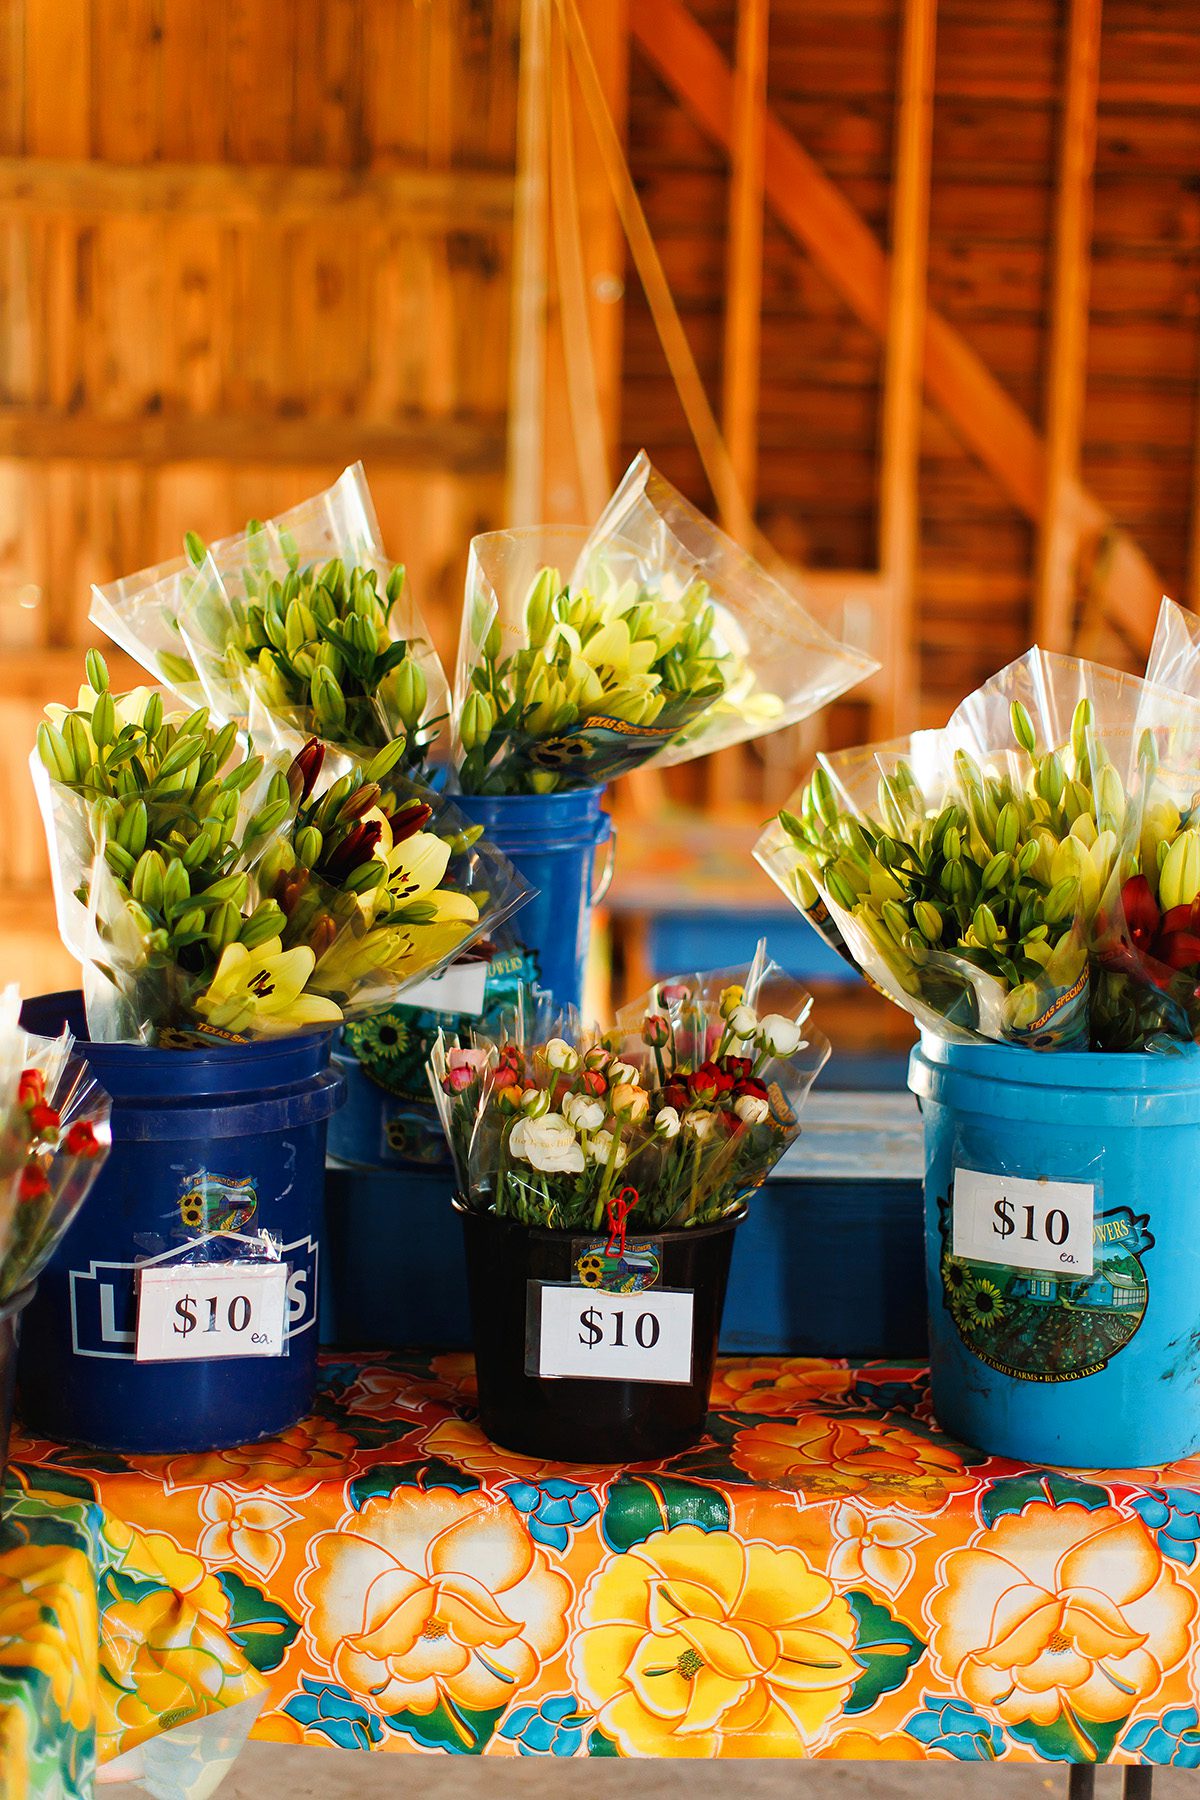 Arnosky Family Farm blue barn with flowers for sale in Wimberley, Texas 